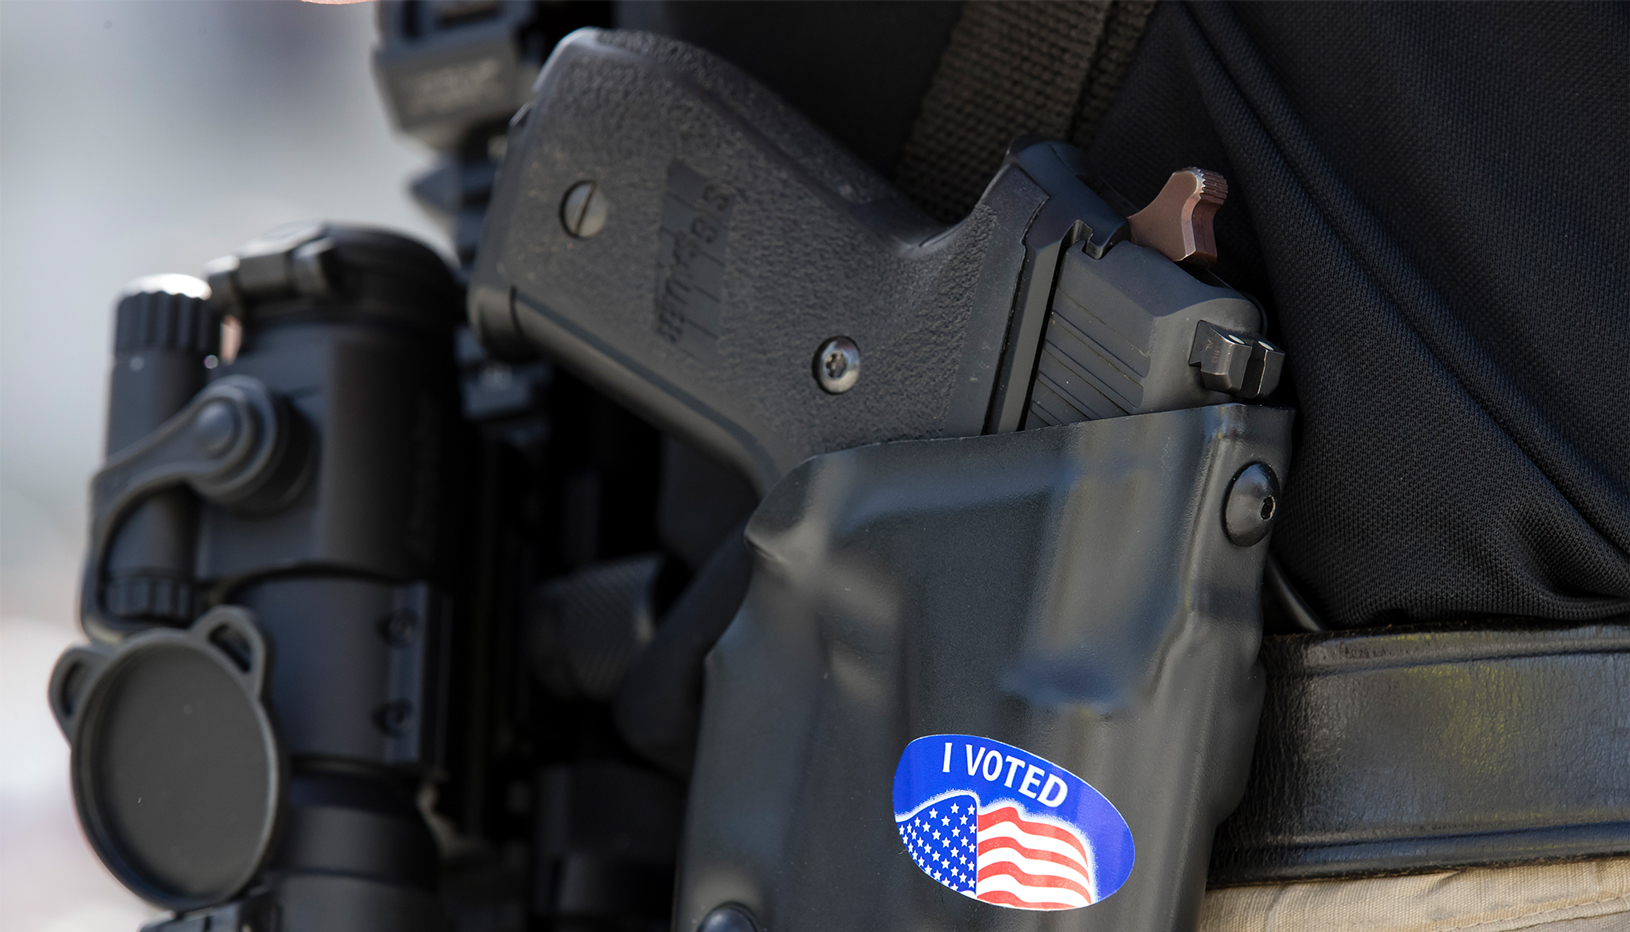 An “I VOTED” sticker on a gun holster.